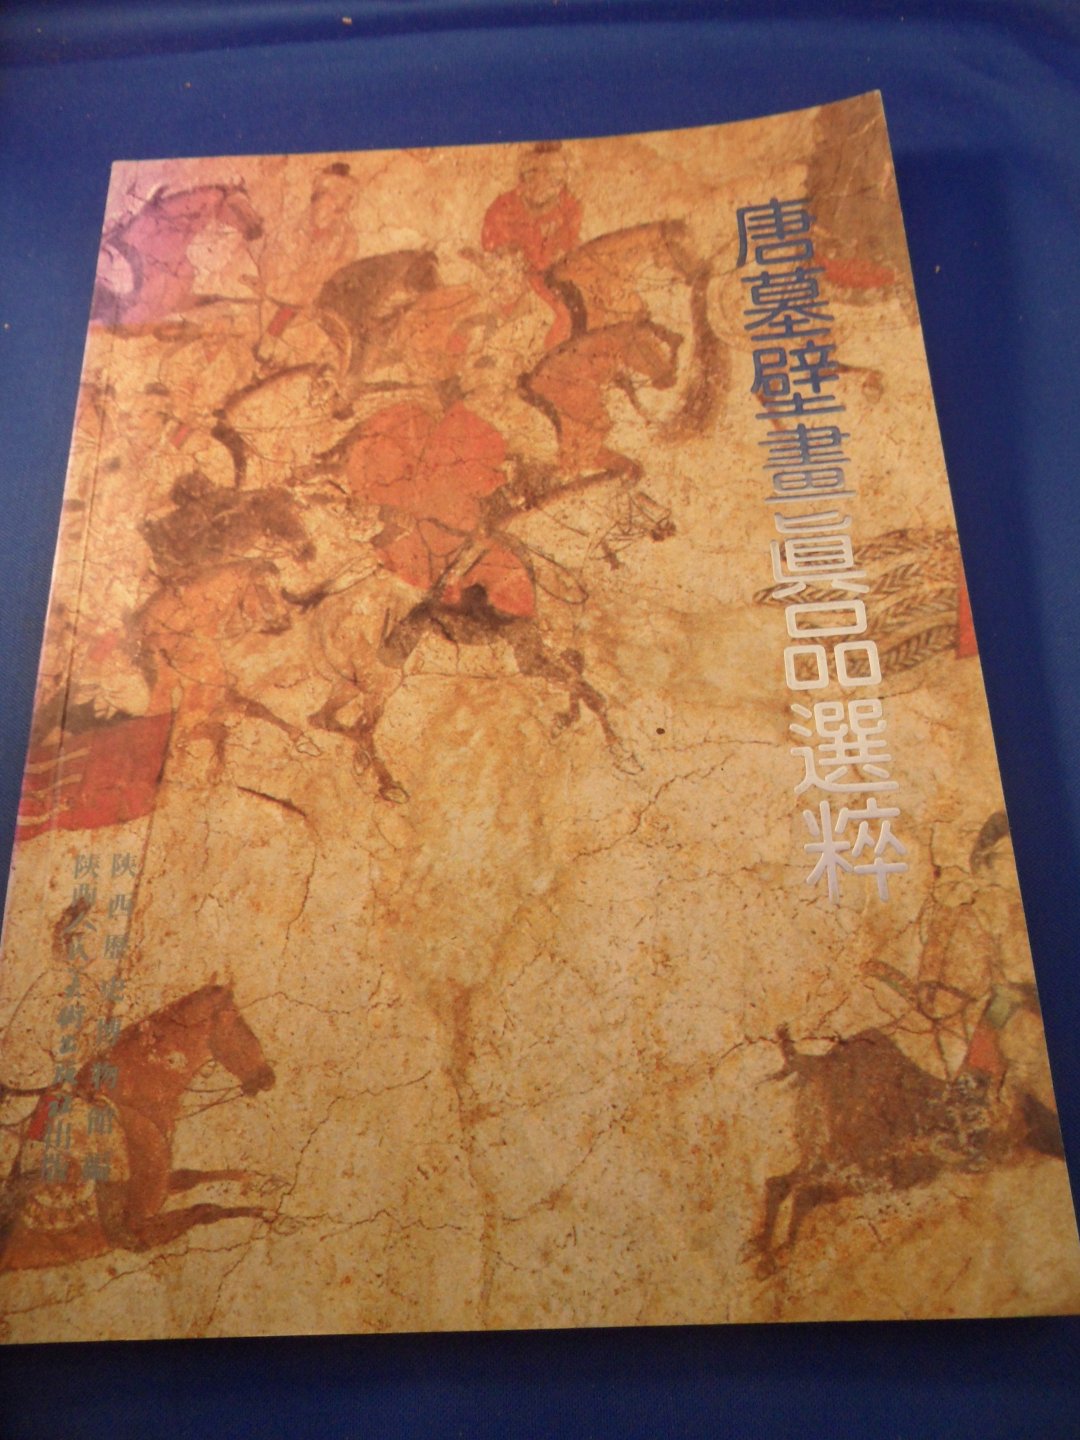 Xixing, Li - Cream of Original Frescoes From Tang Tombs